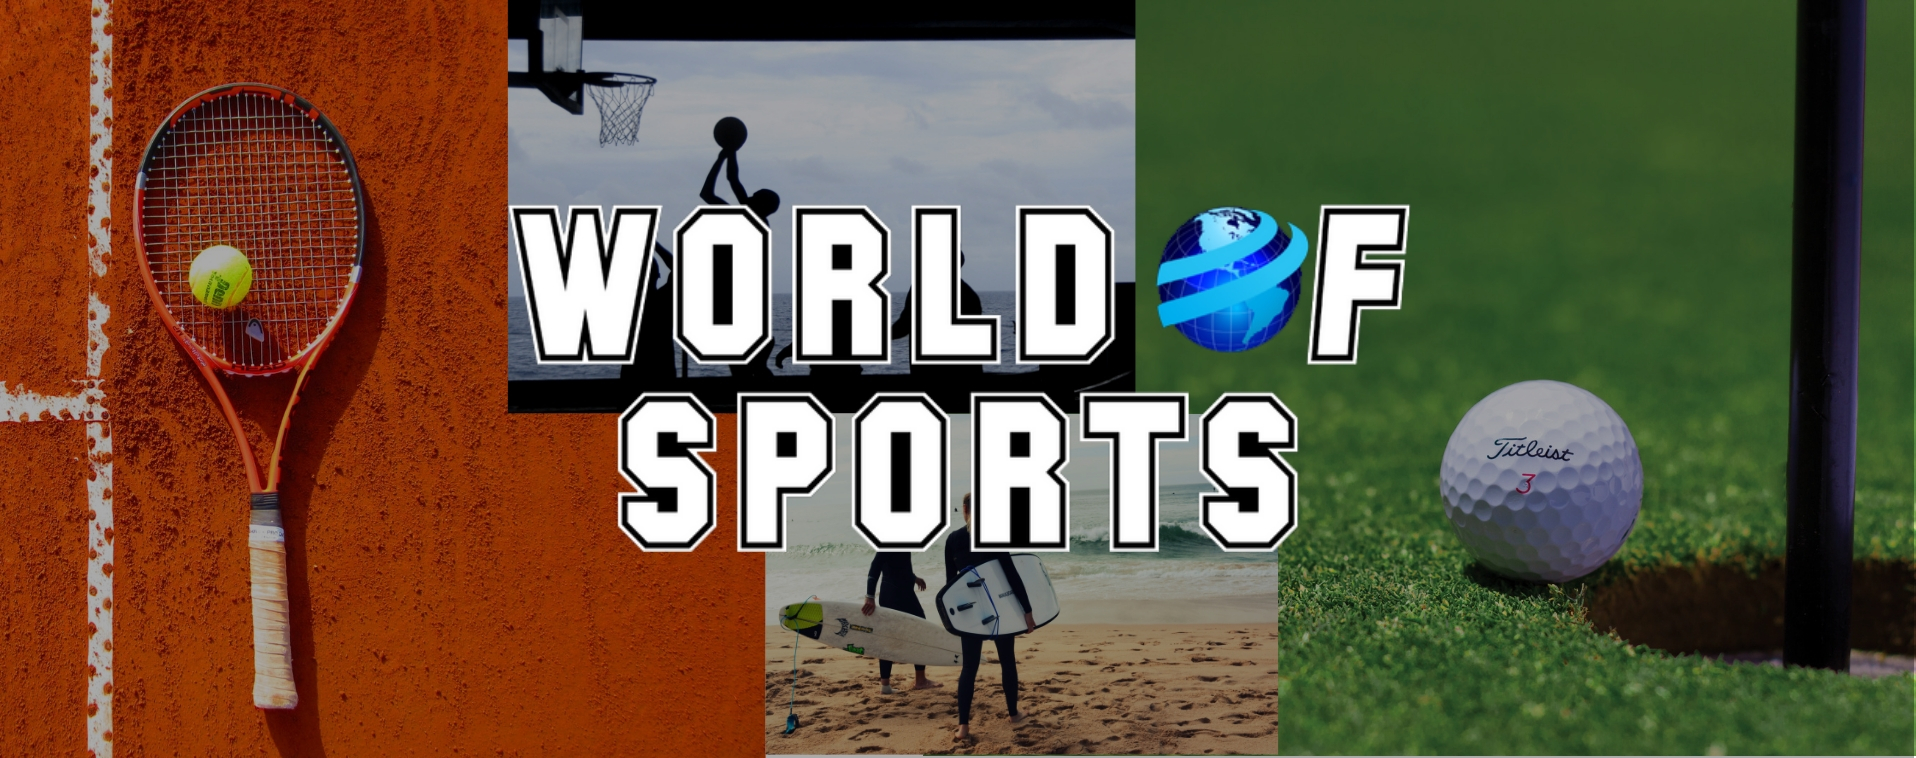 World of Sports 1916x758